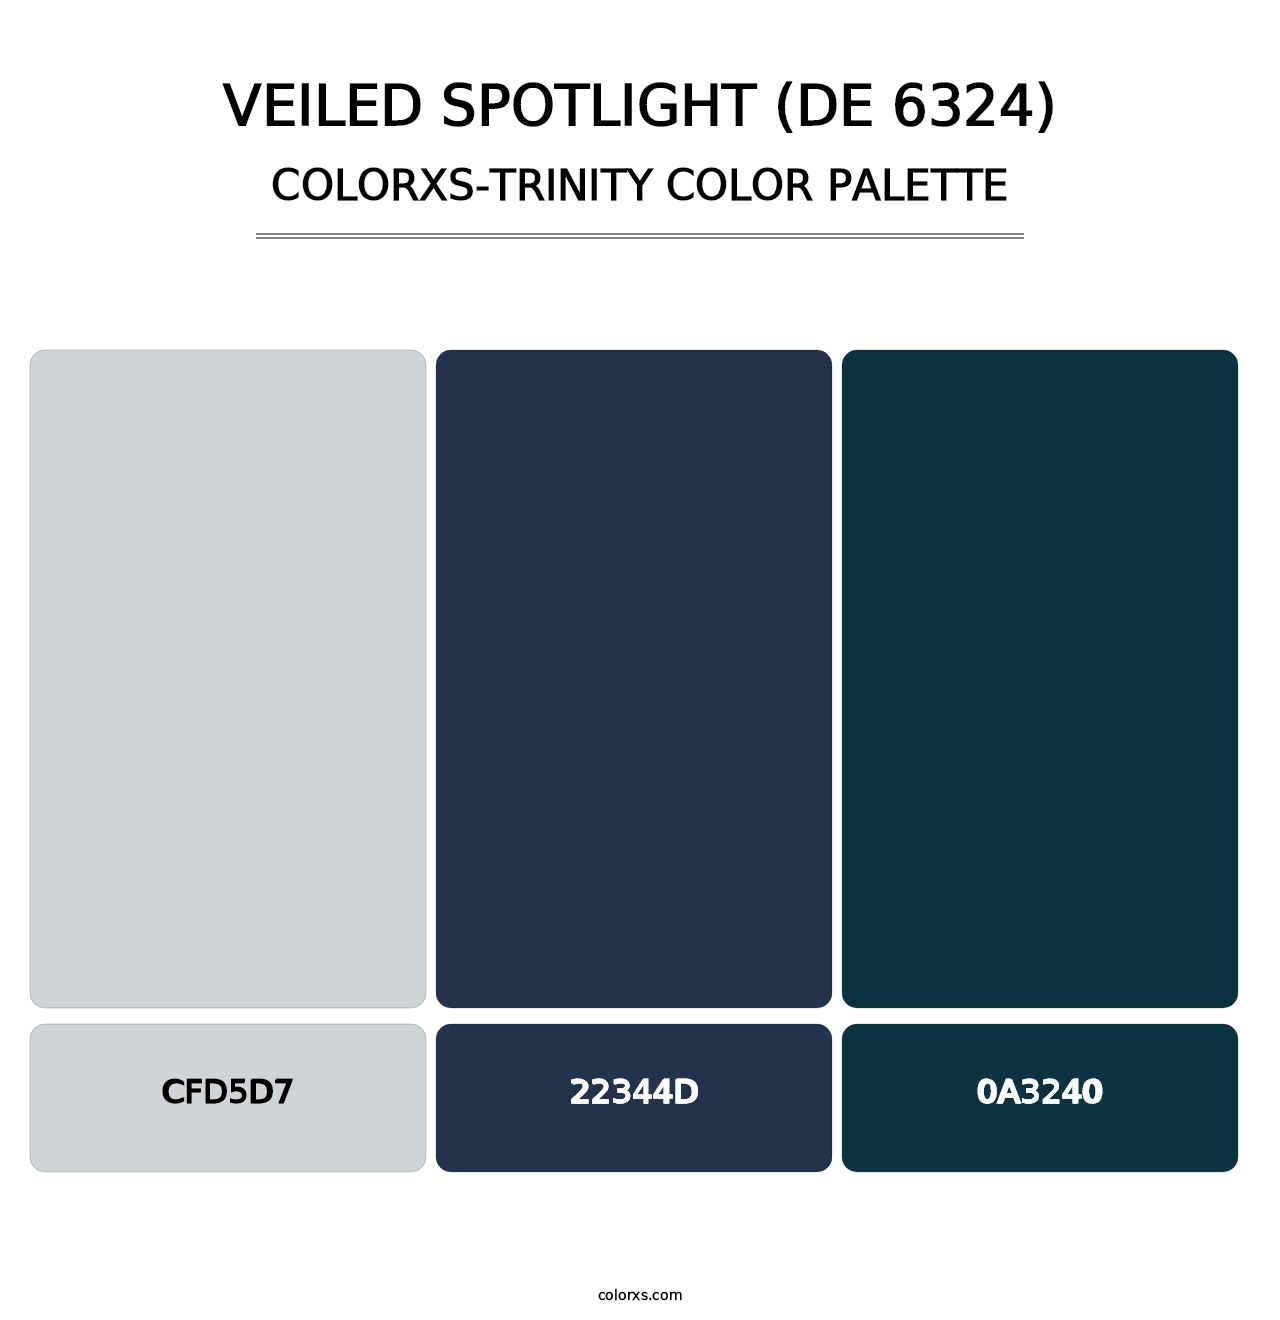 Veiled Spotlight (DE 6324) - Colorxs Trinity Palette